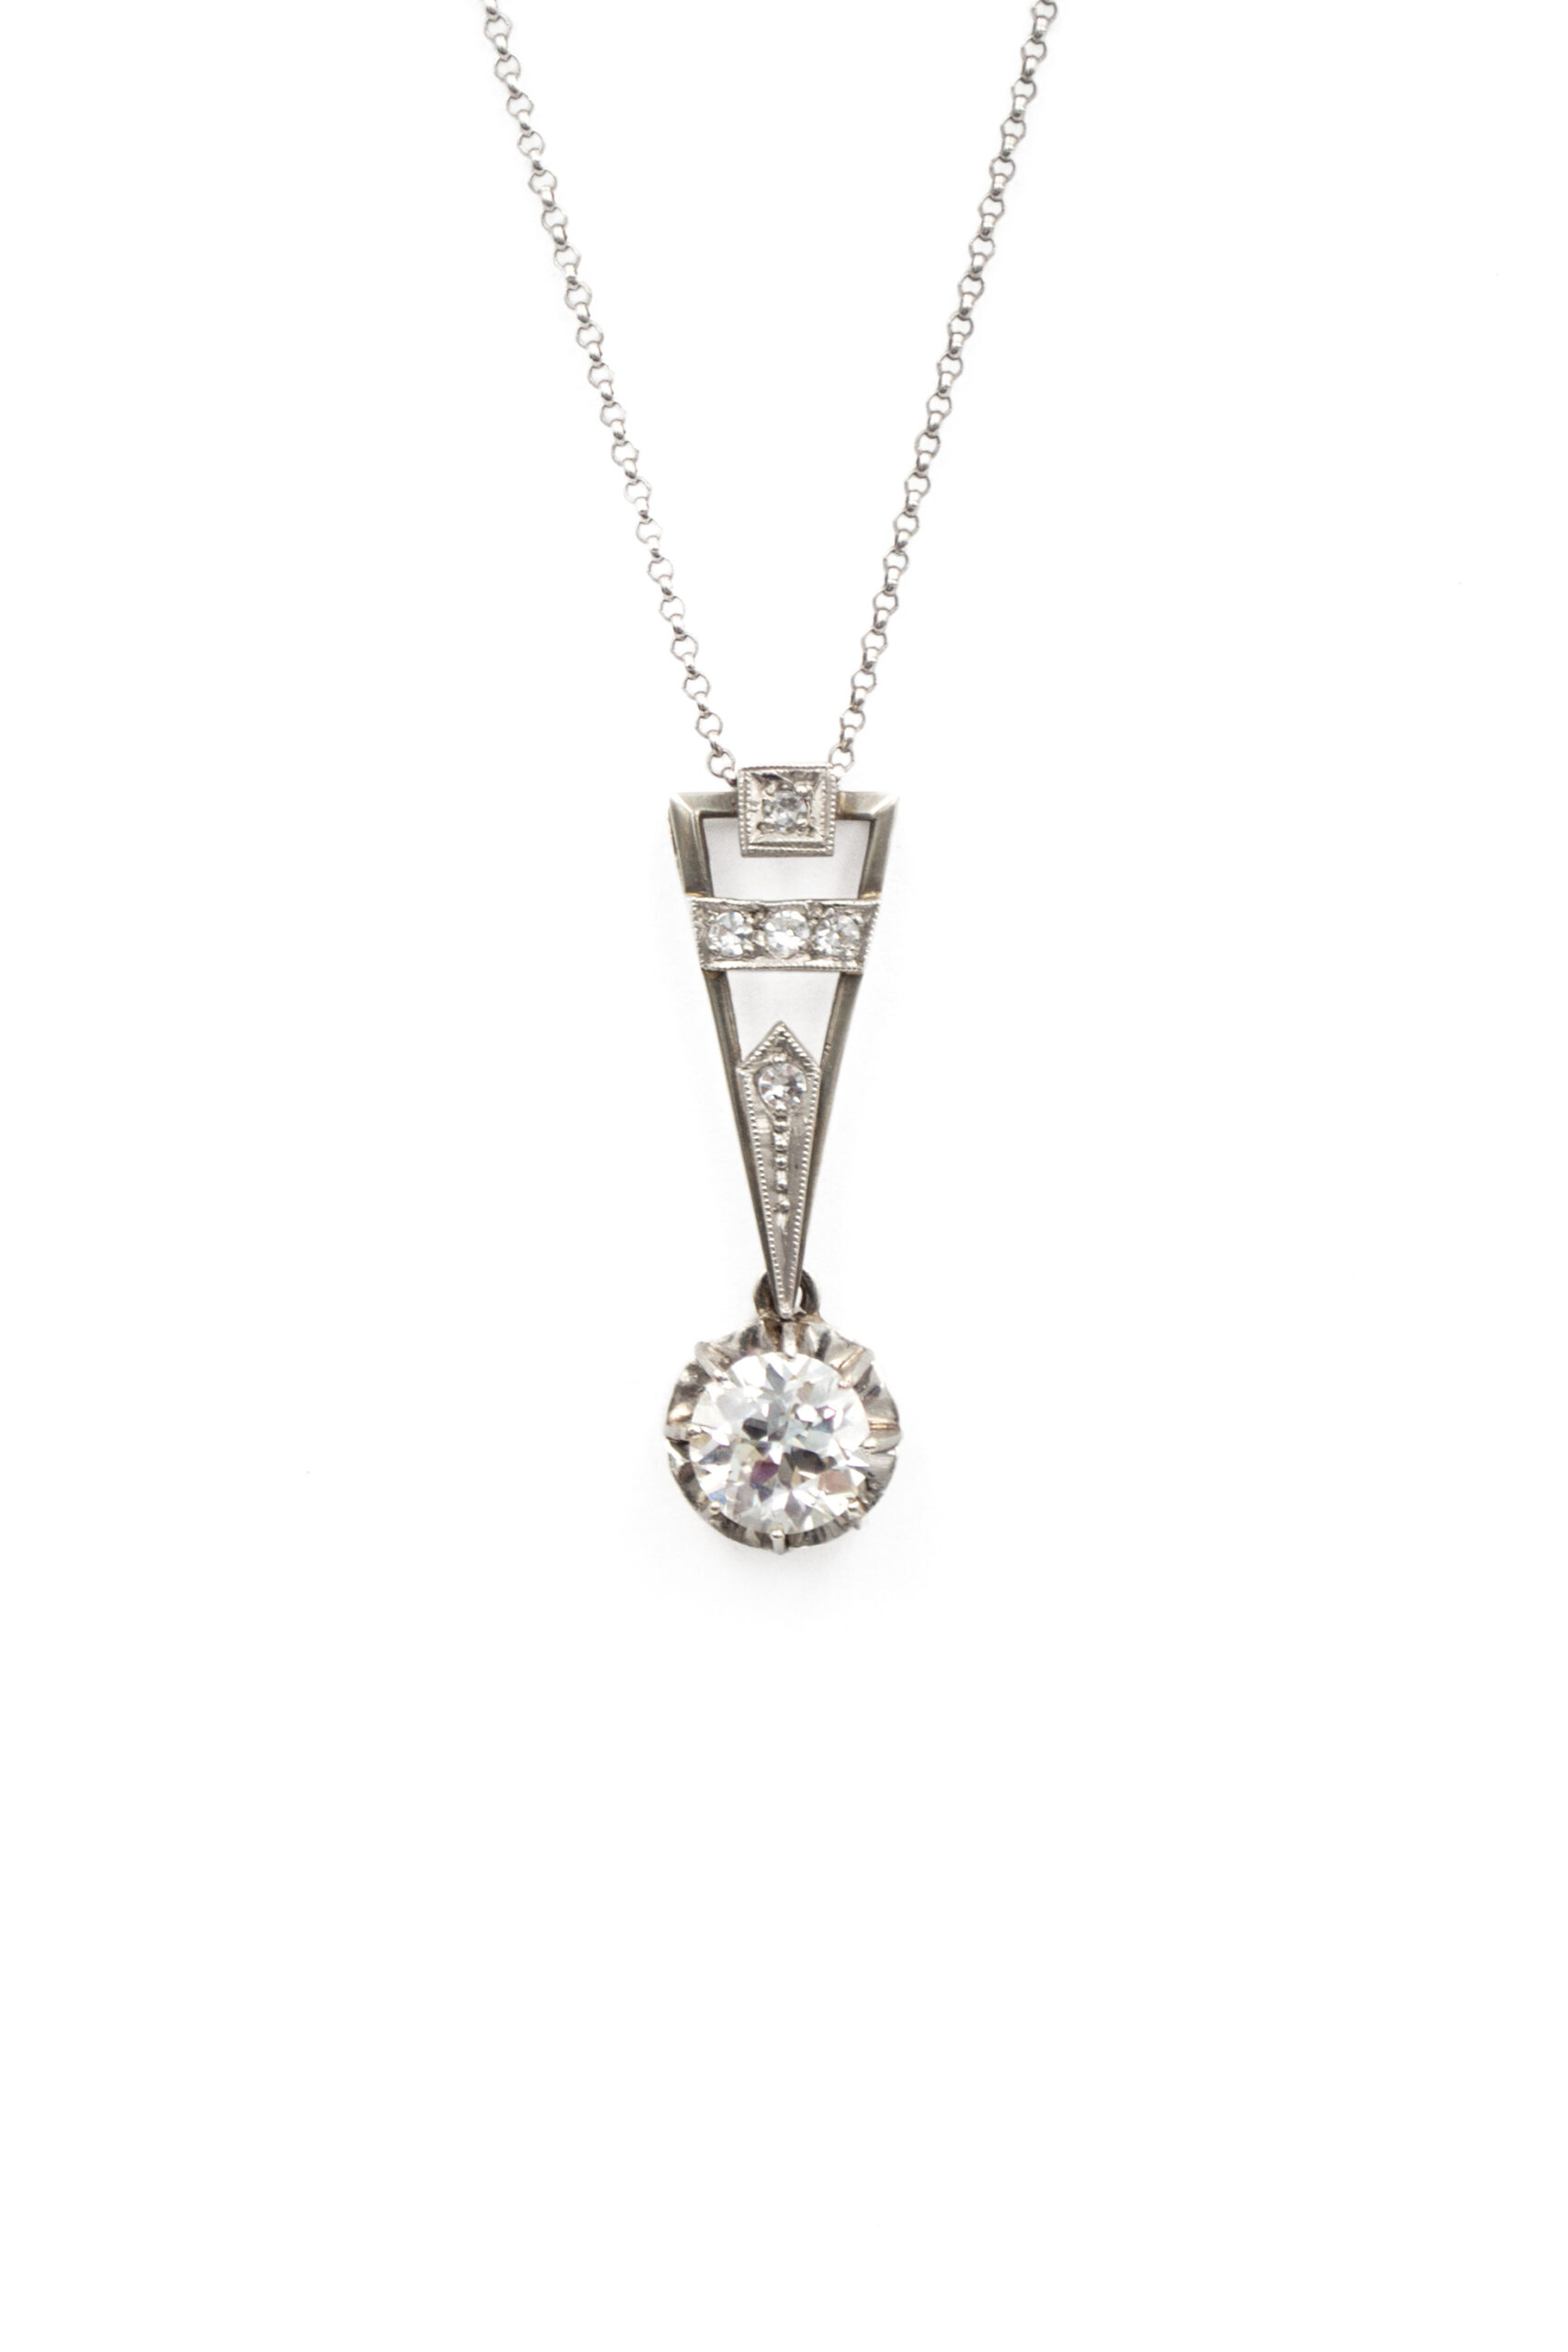 Art Deco Rock Crystal Old Mine Diamond Pendant Necklace Filigree 14K White  Gold | eBay